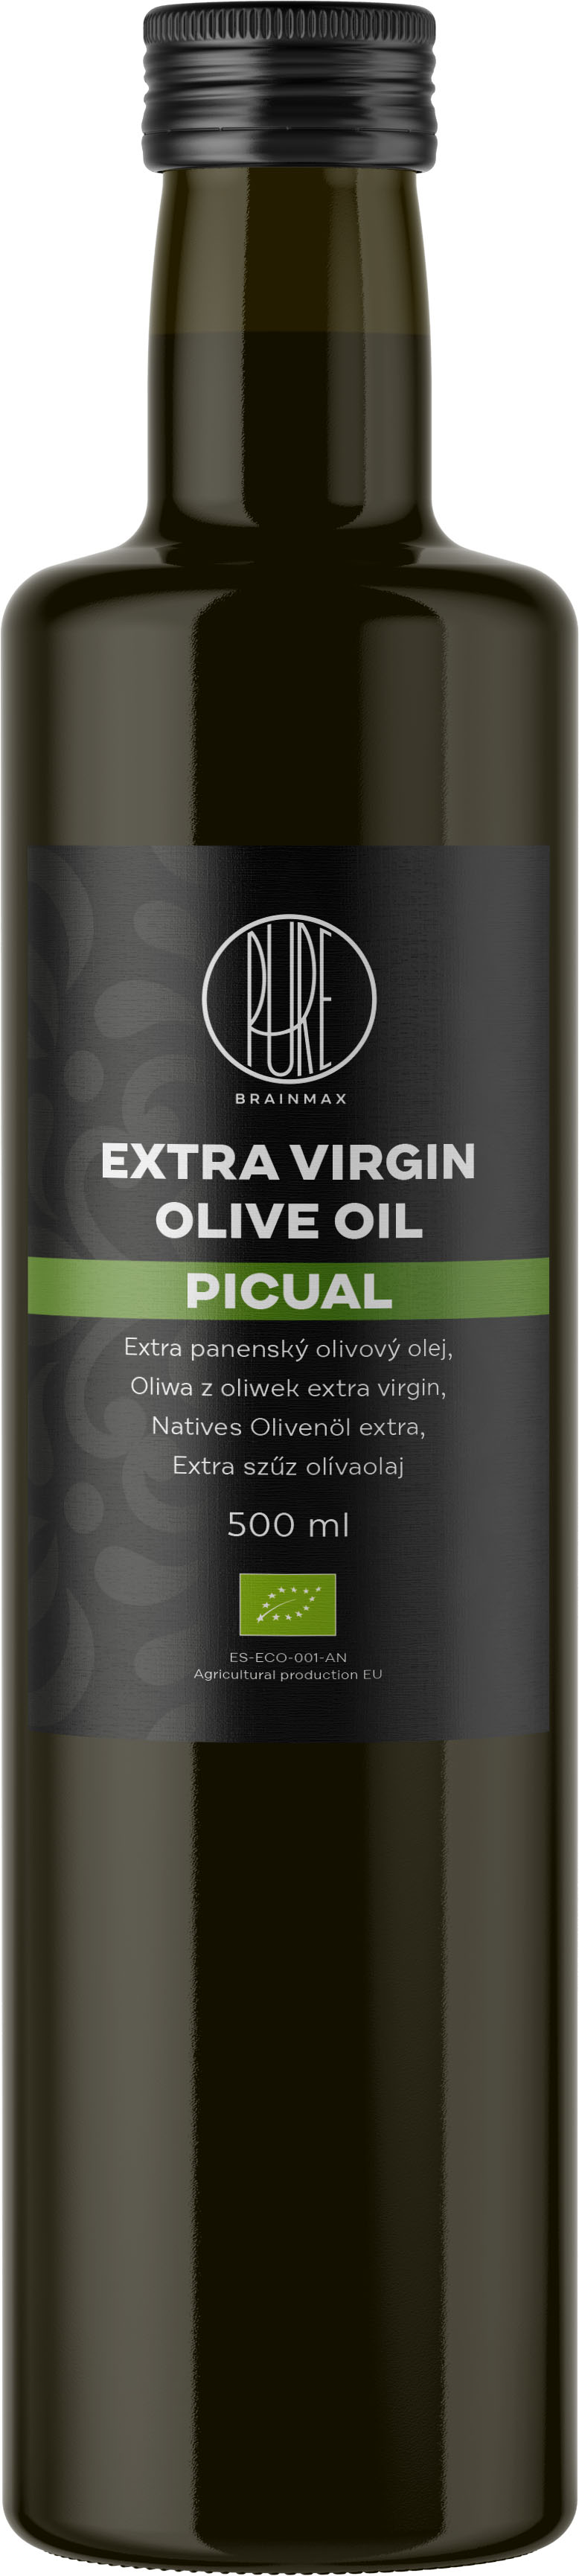 Levně BrainMax Pure Extra panenský olivový olej Picual, BIO, 500 ml Španělský extra panenský olivový olej s nejvyšším množstvím polyfenolů // * ES-ECO-001-AN certifikát